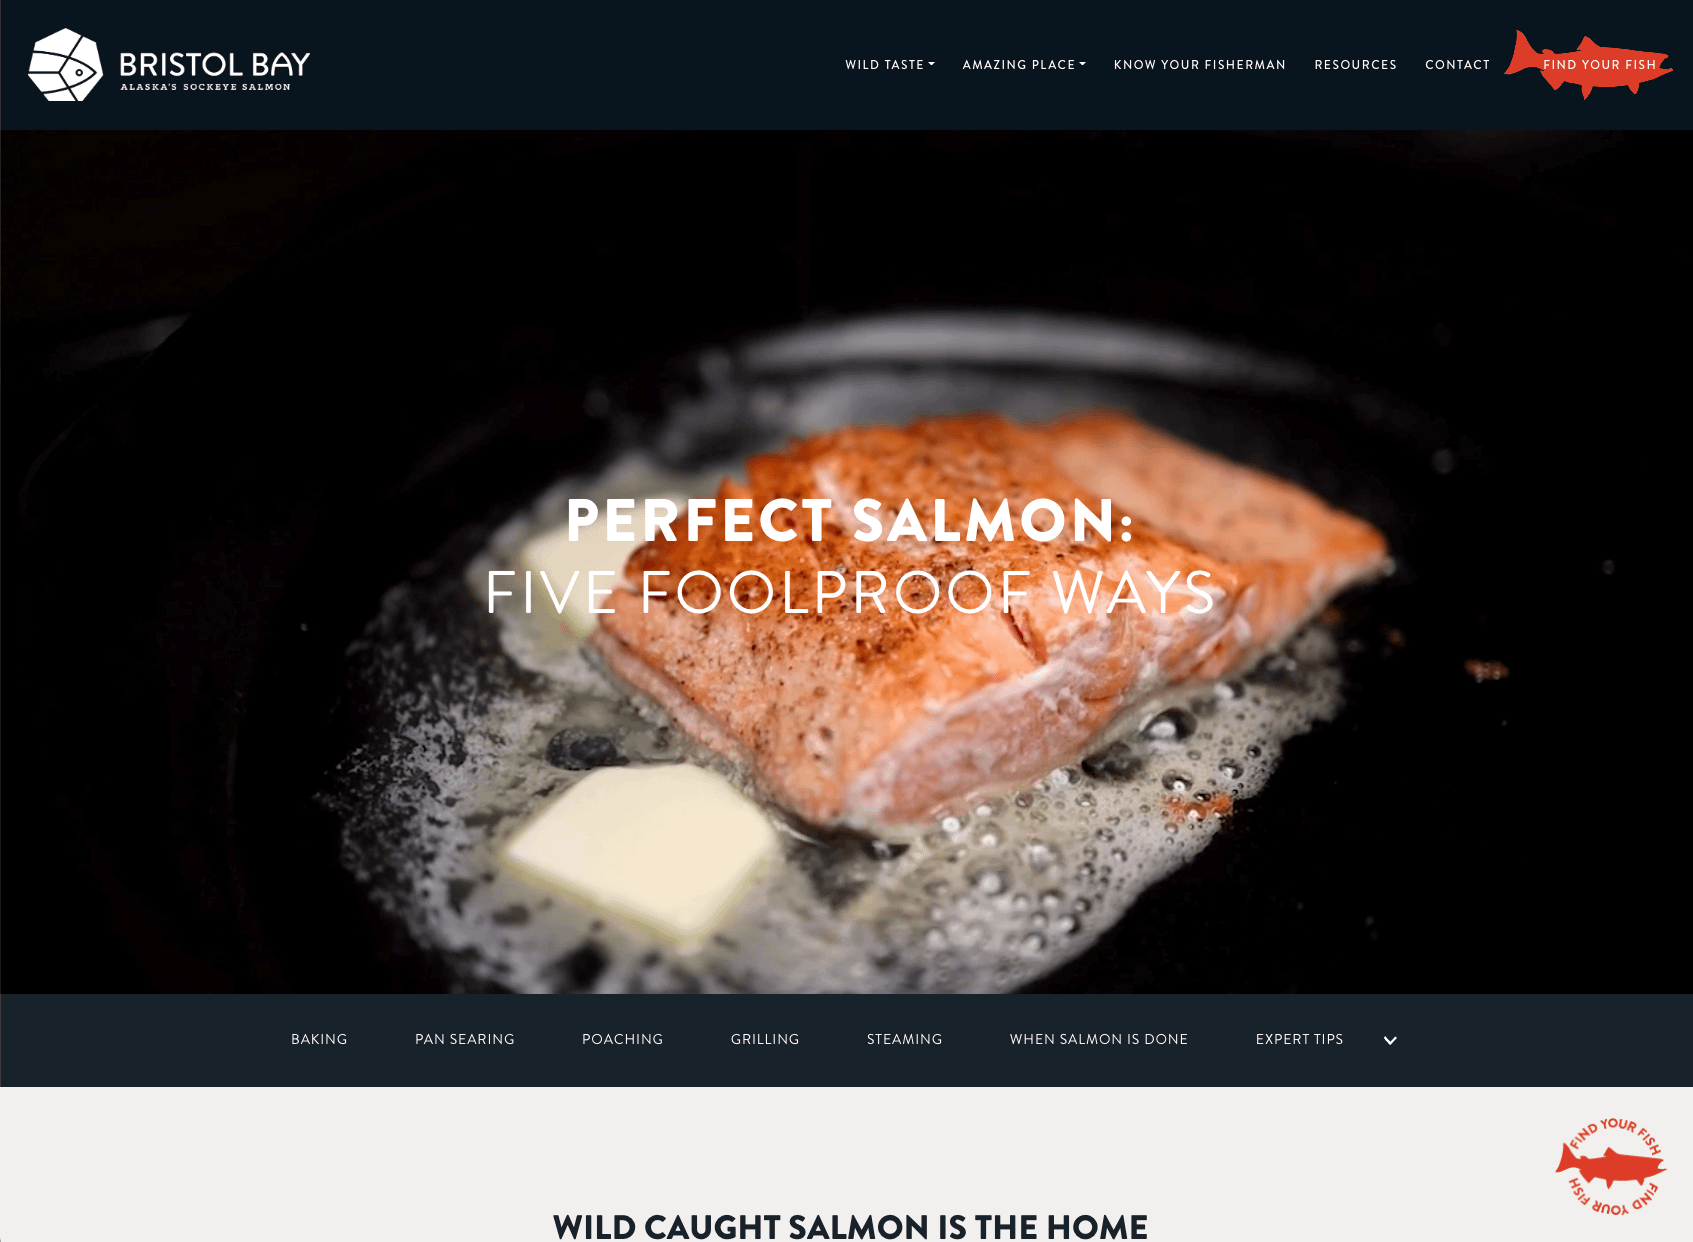 Bristol Bay Sockeye Salmon Cooking Guide homepage design